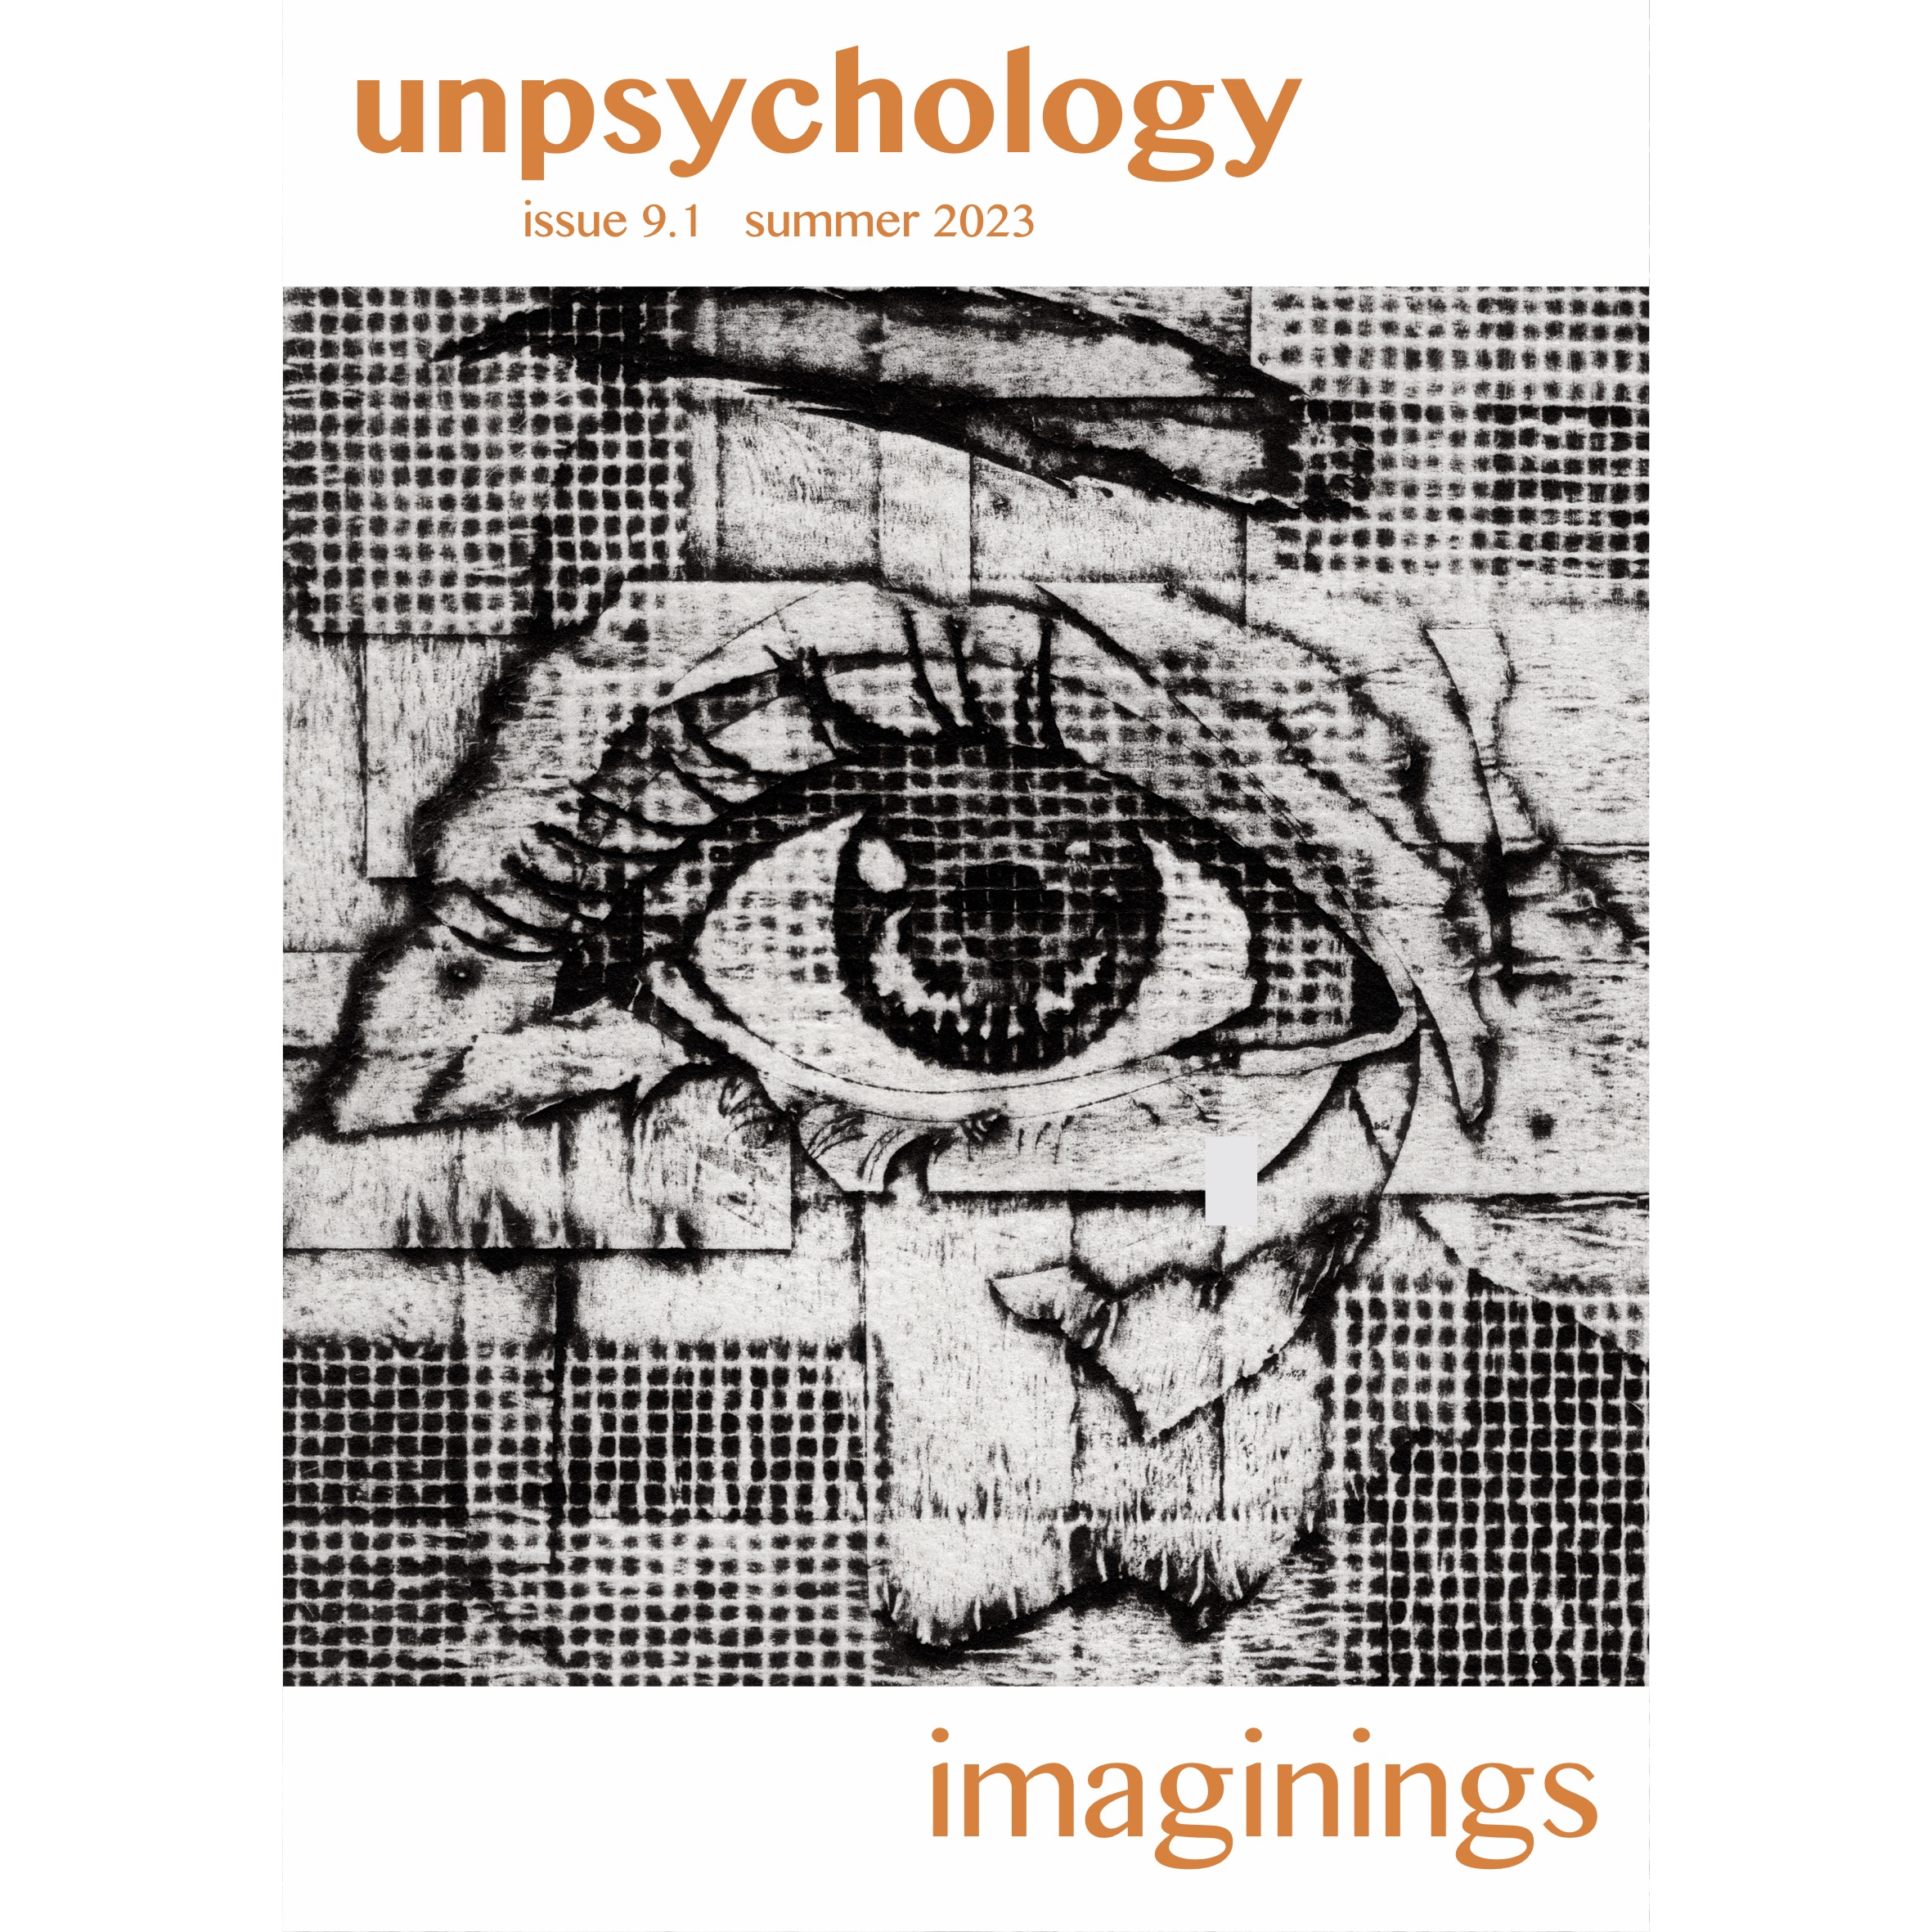 Unpsychology 9.1 „Imaginings“